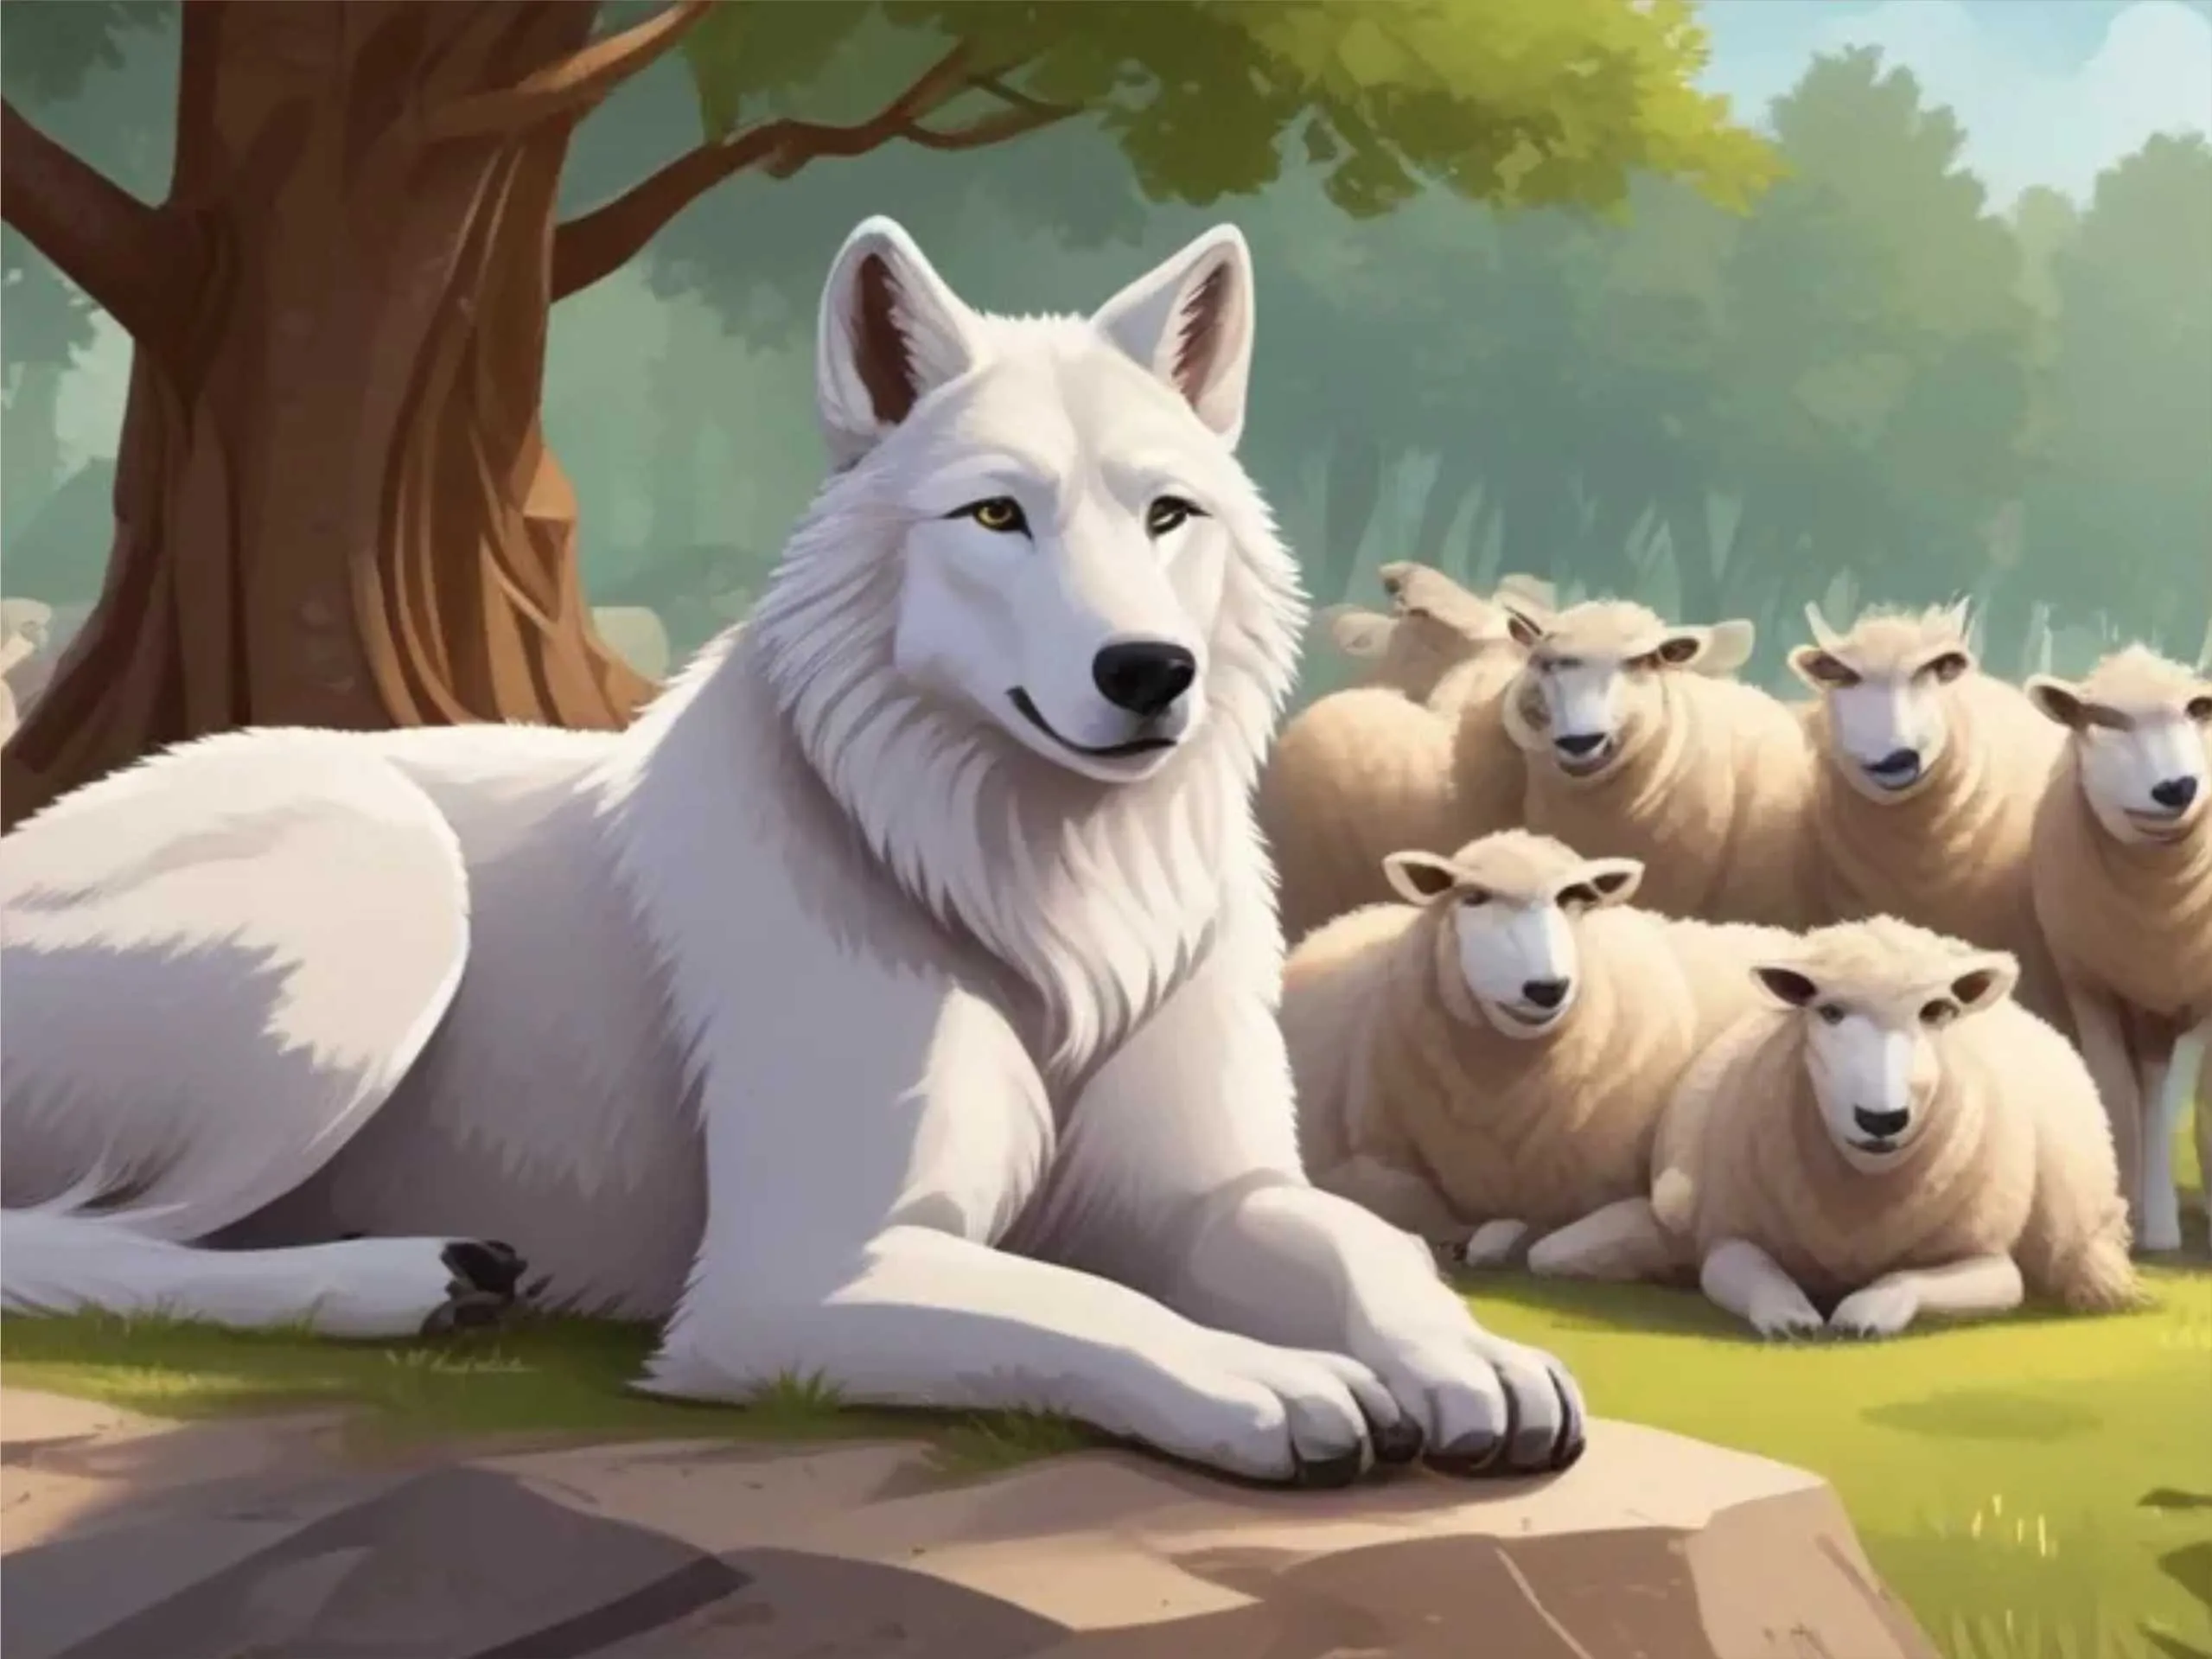 Wolf near a heard of sheeps cartoon image